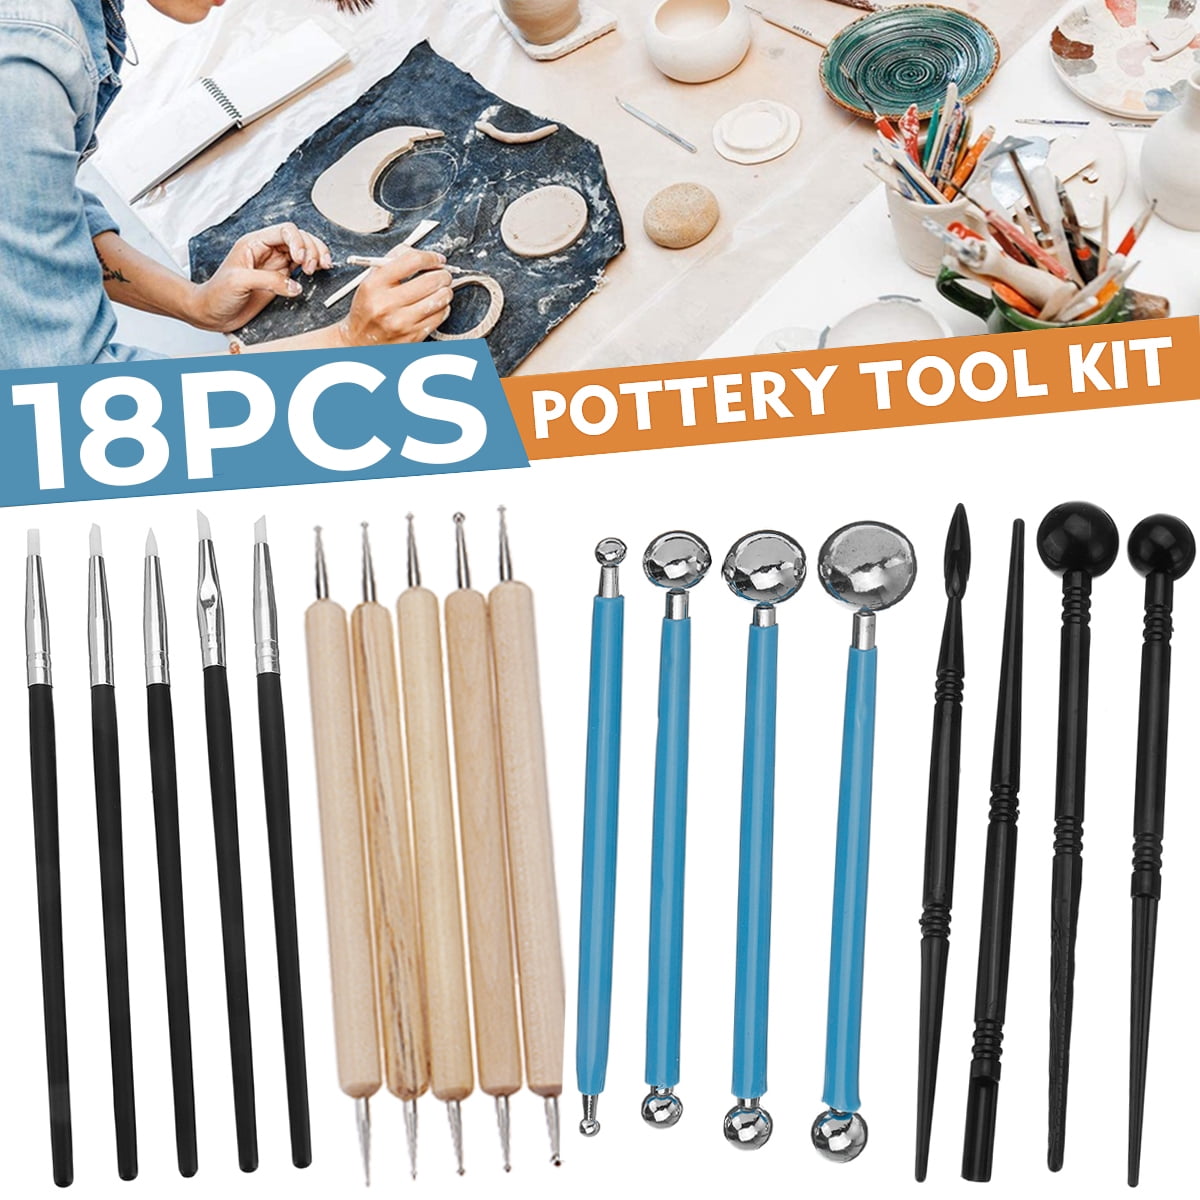 SUPVOX Pottery Tool Kit Ceramics Carving Sculpting Modeling Trimming Kit with Storage Bag 18pcs